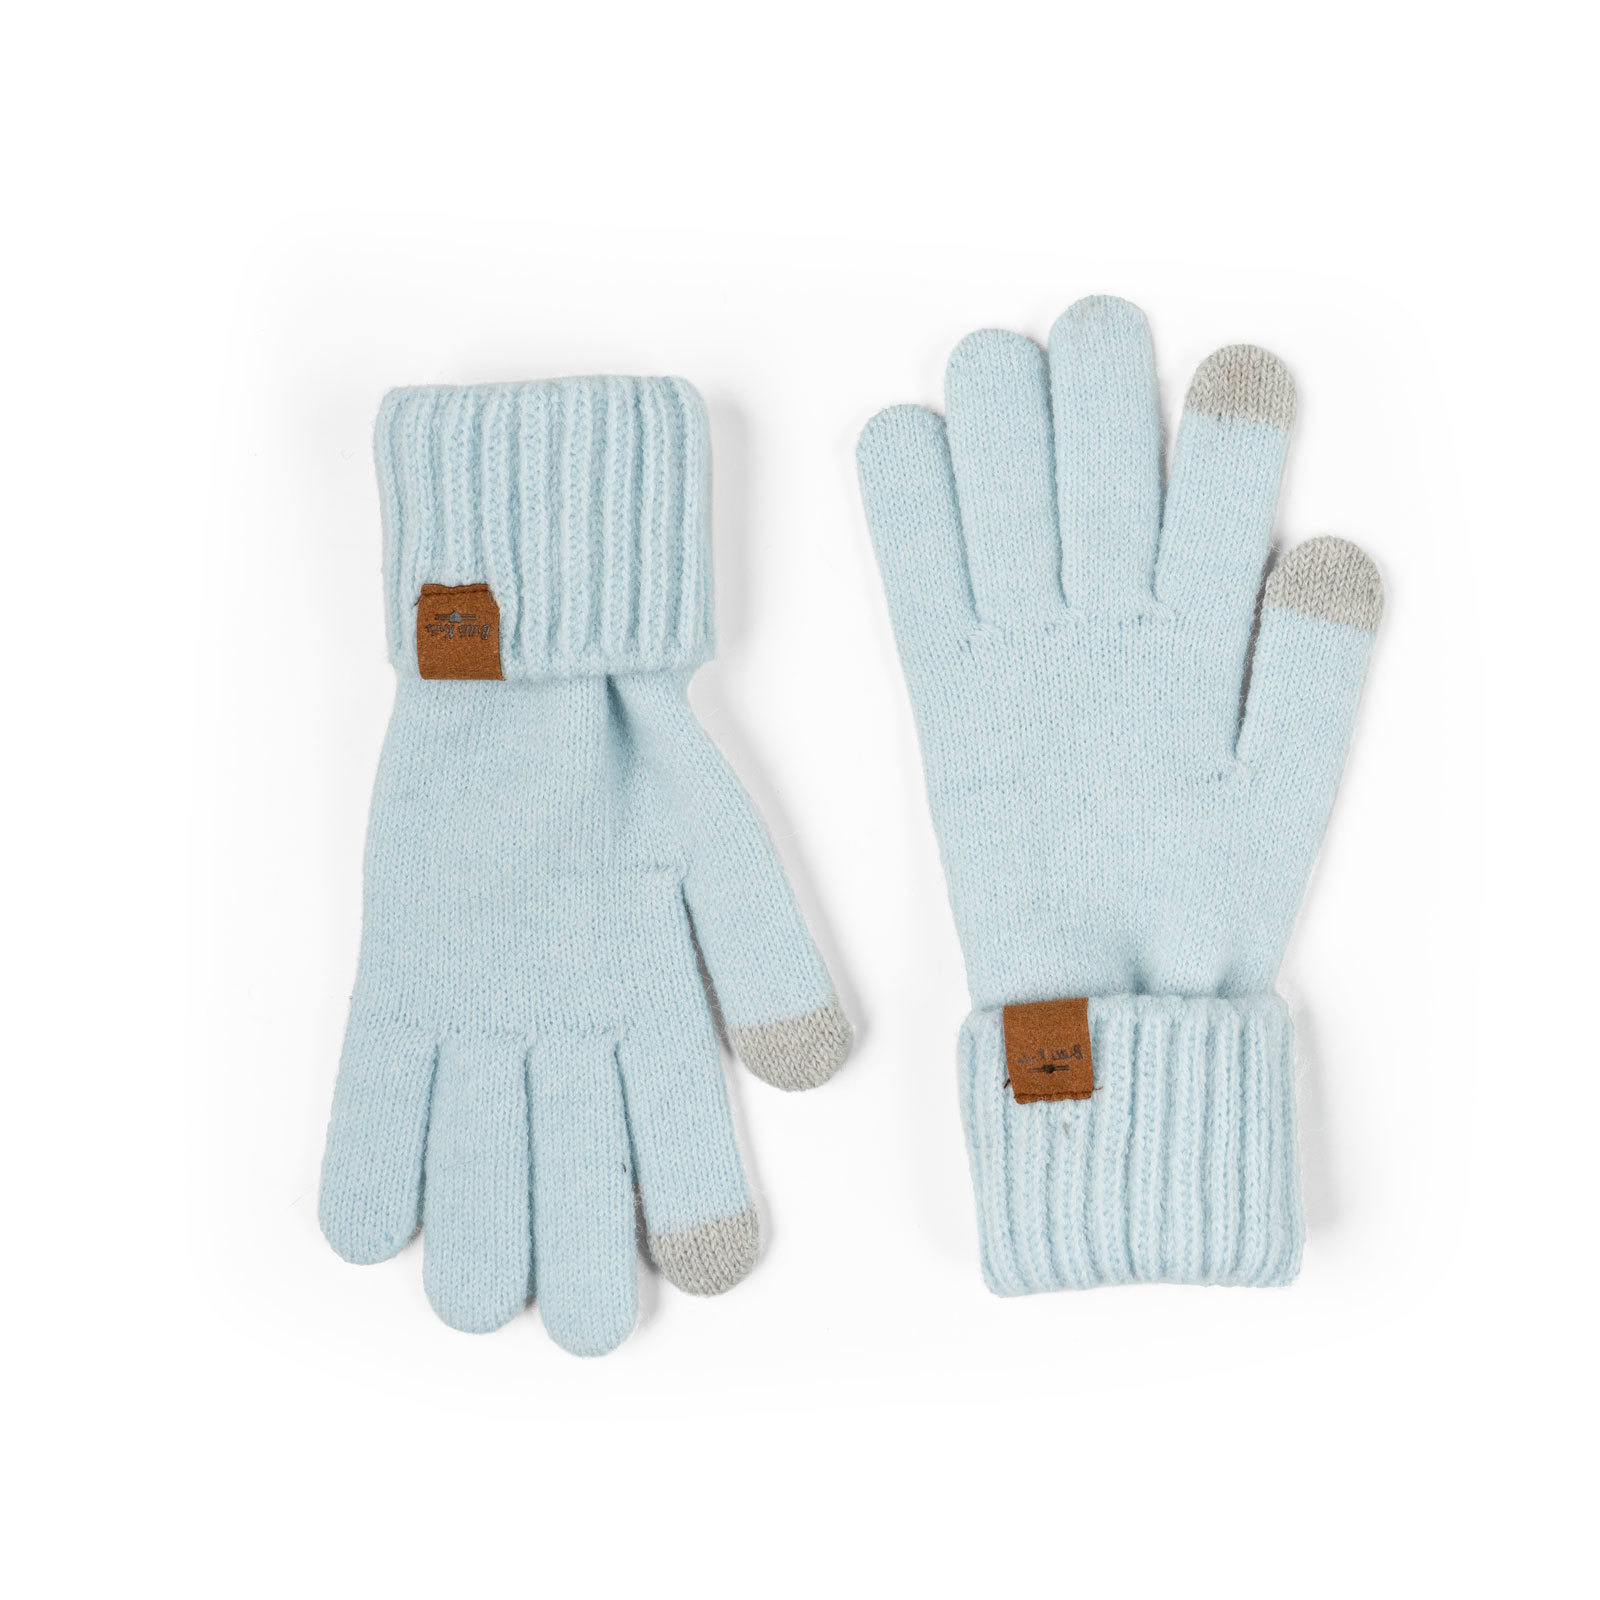 Britt's Knits Ultra-Soft Stretch Knit Women's Warm Winter Gloves